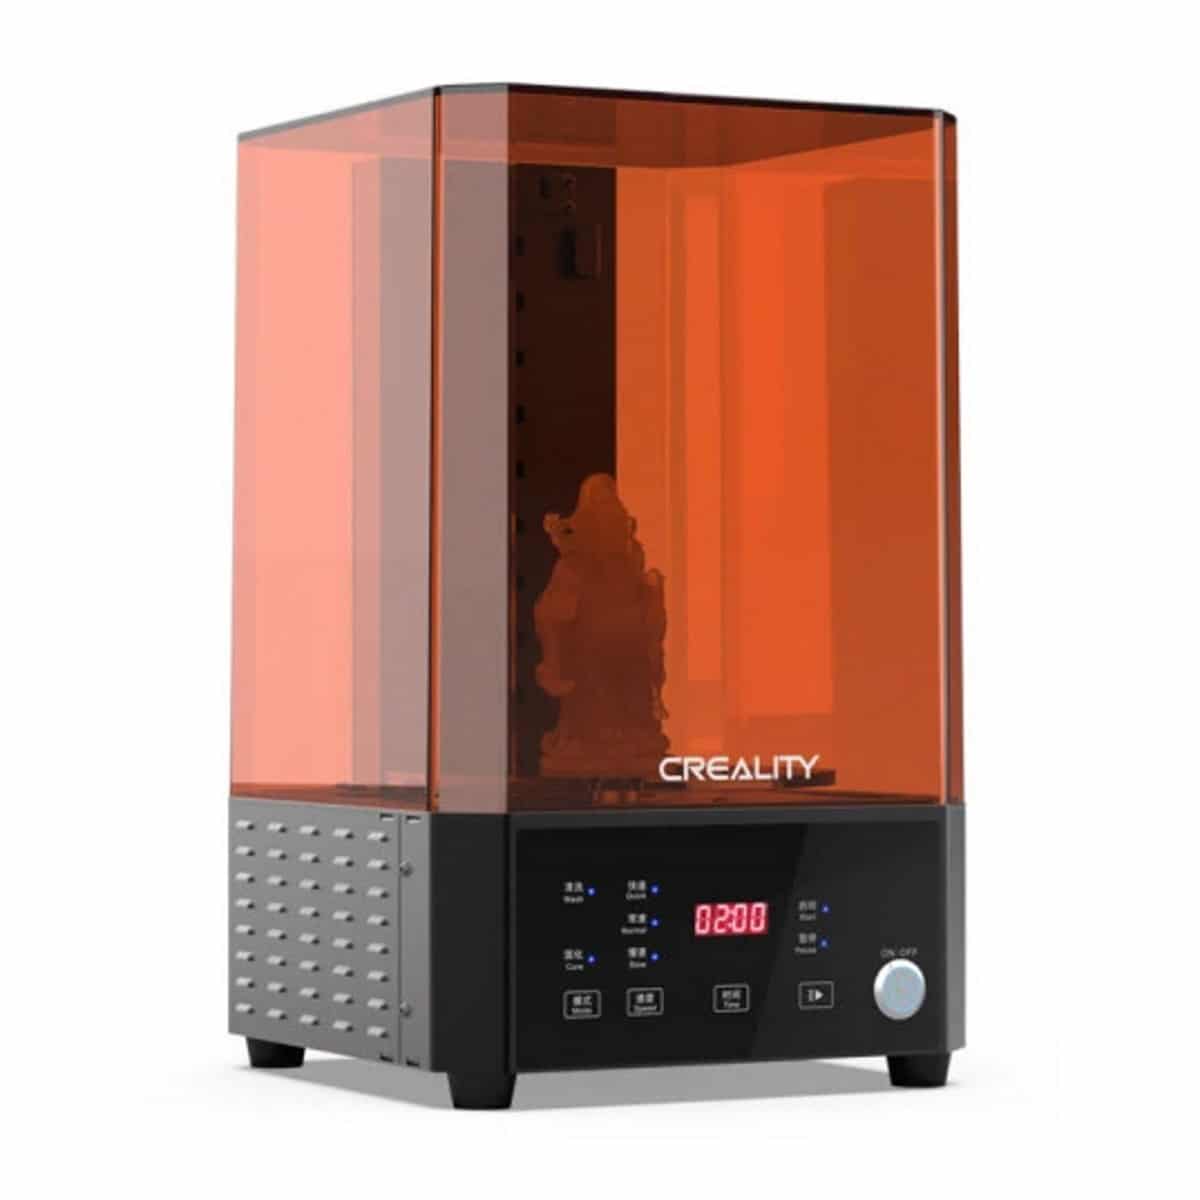 Køb Creality UW-01 - Washing/Curing Machine 3d printer - Pris 1599.00 kr.